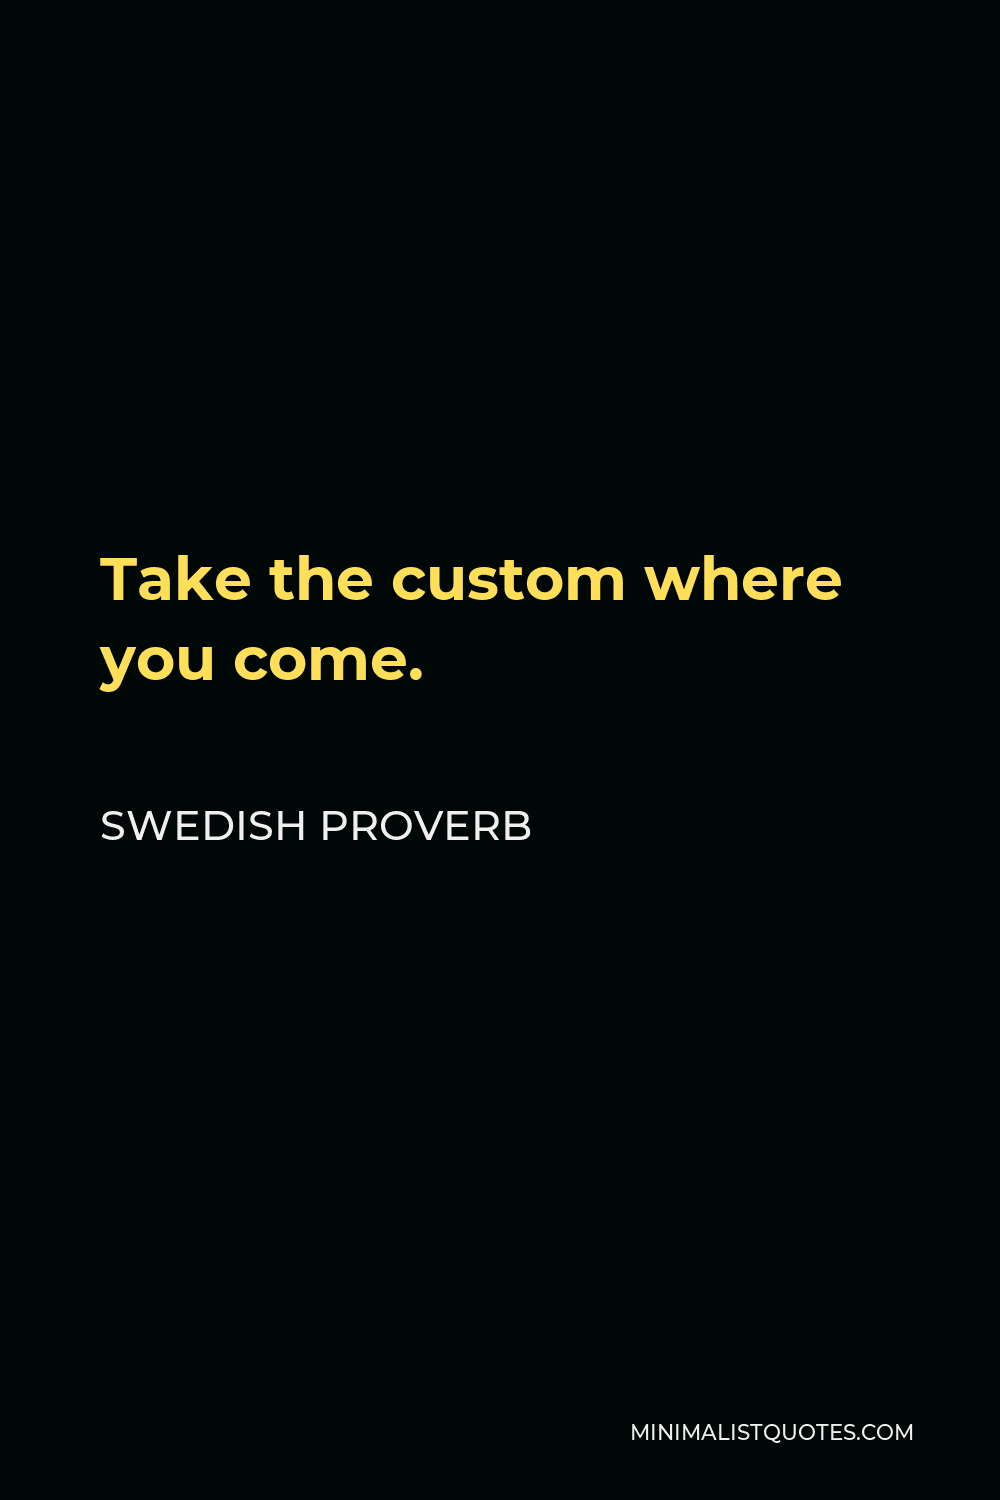 Swedish Proverb Quote - Take the custom where you come.